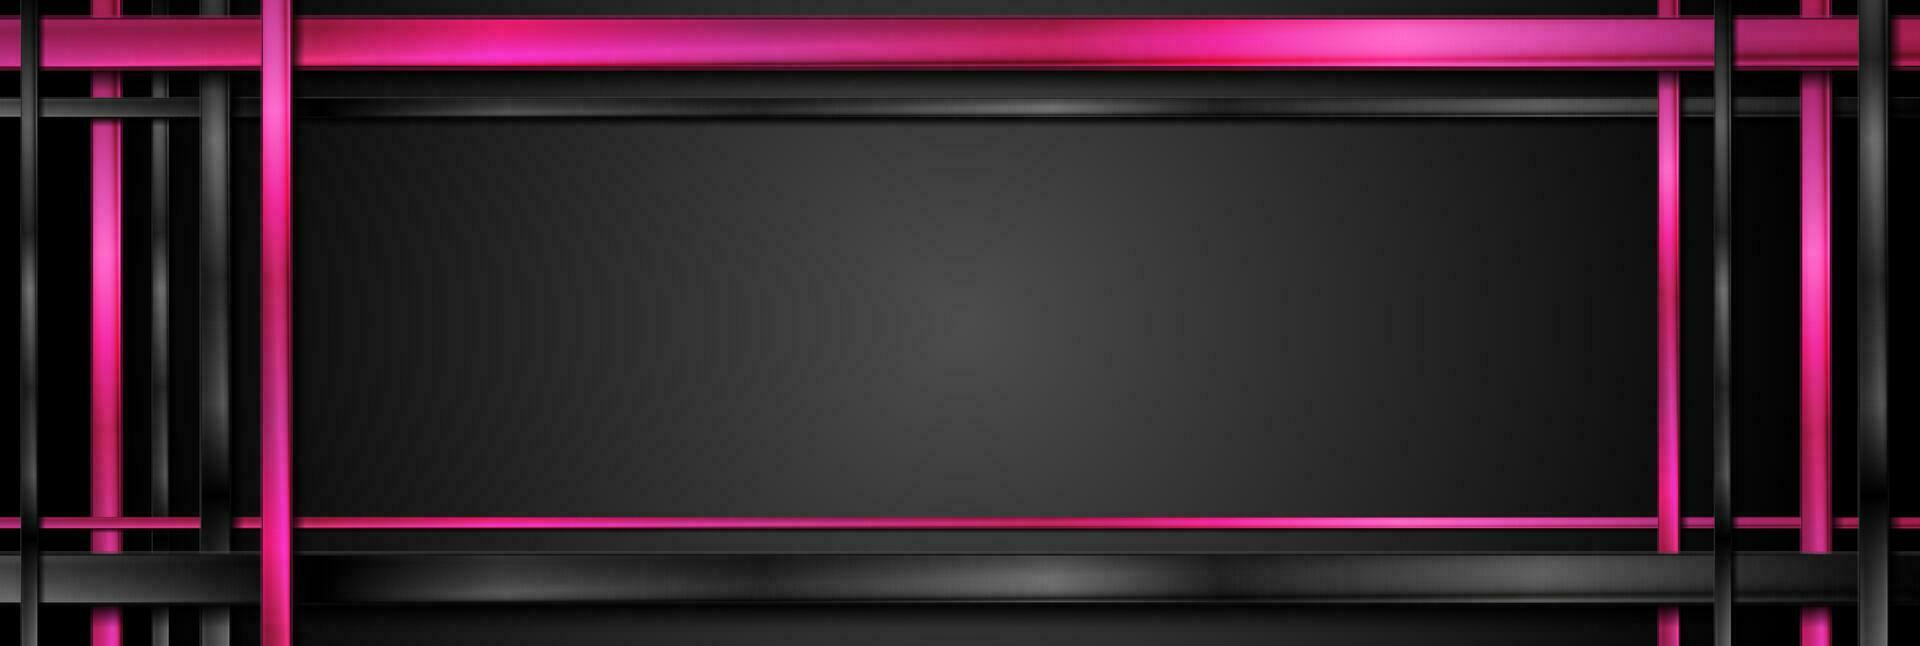 abstract tech banier met roze en zwart glanzend strepen vector